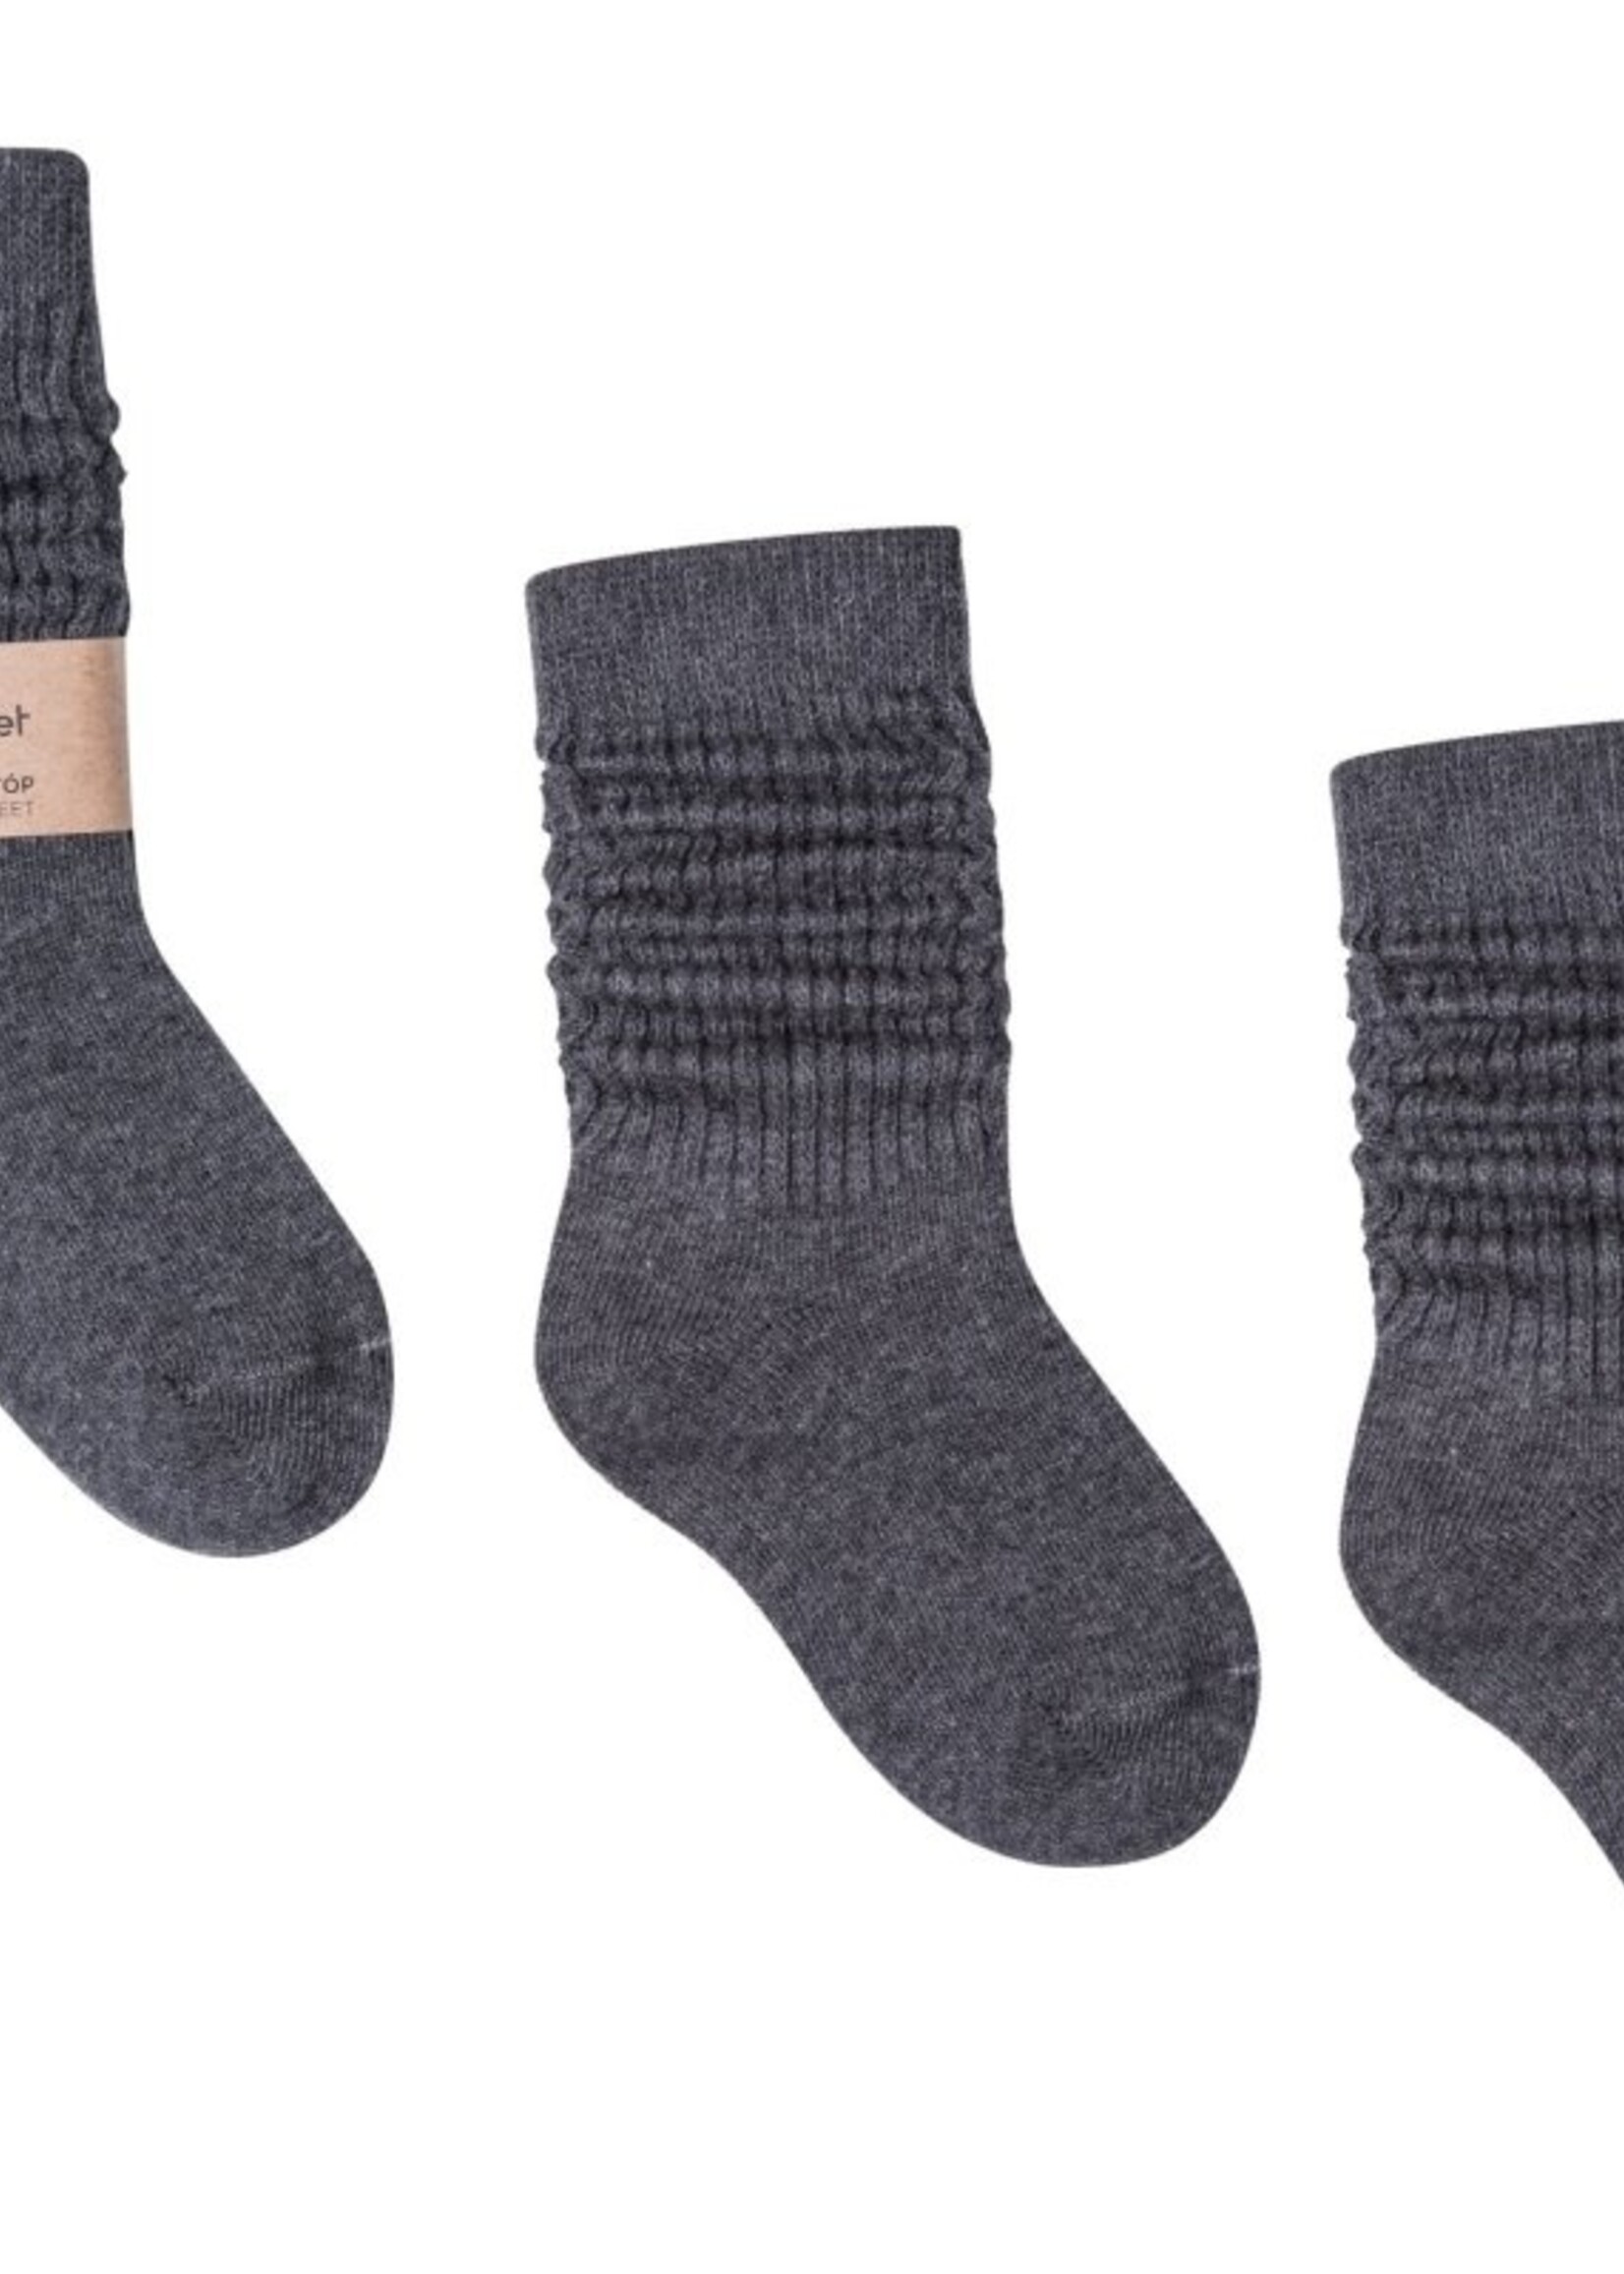 Mama's feet Dream Socks Graphite